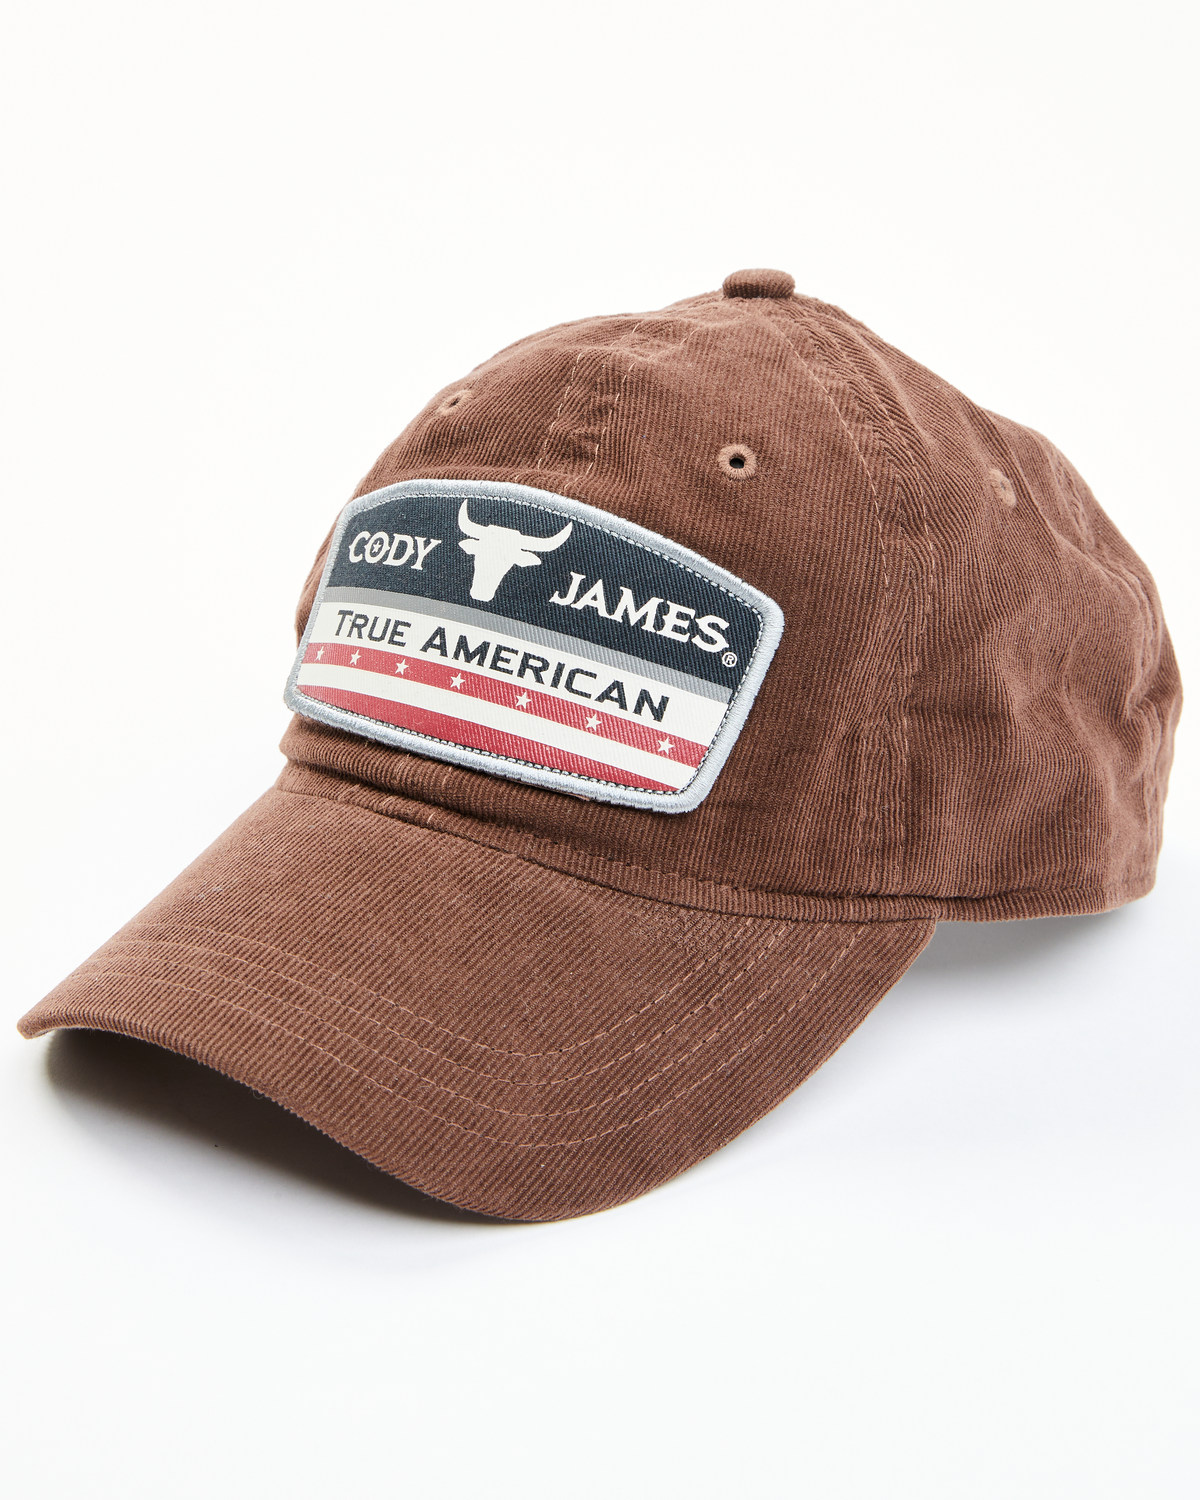 Cody James Men's Corduroy True American Logo Patch Ball Cap